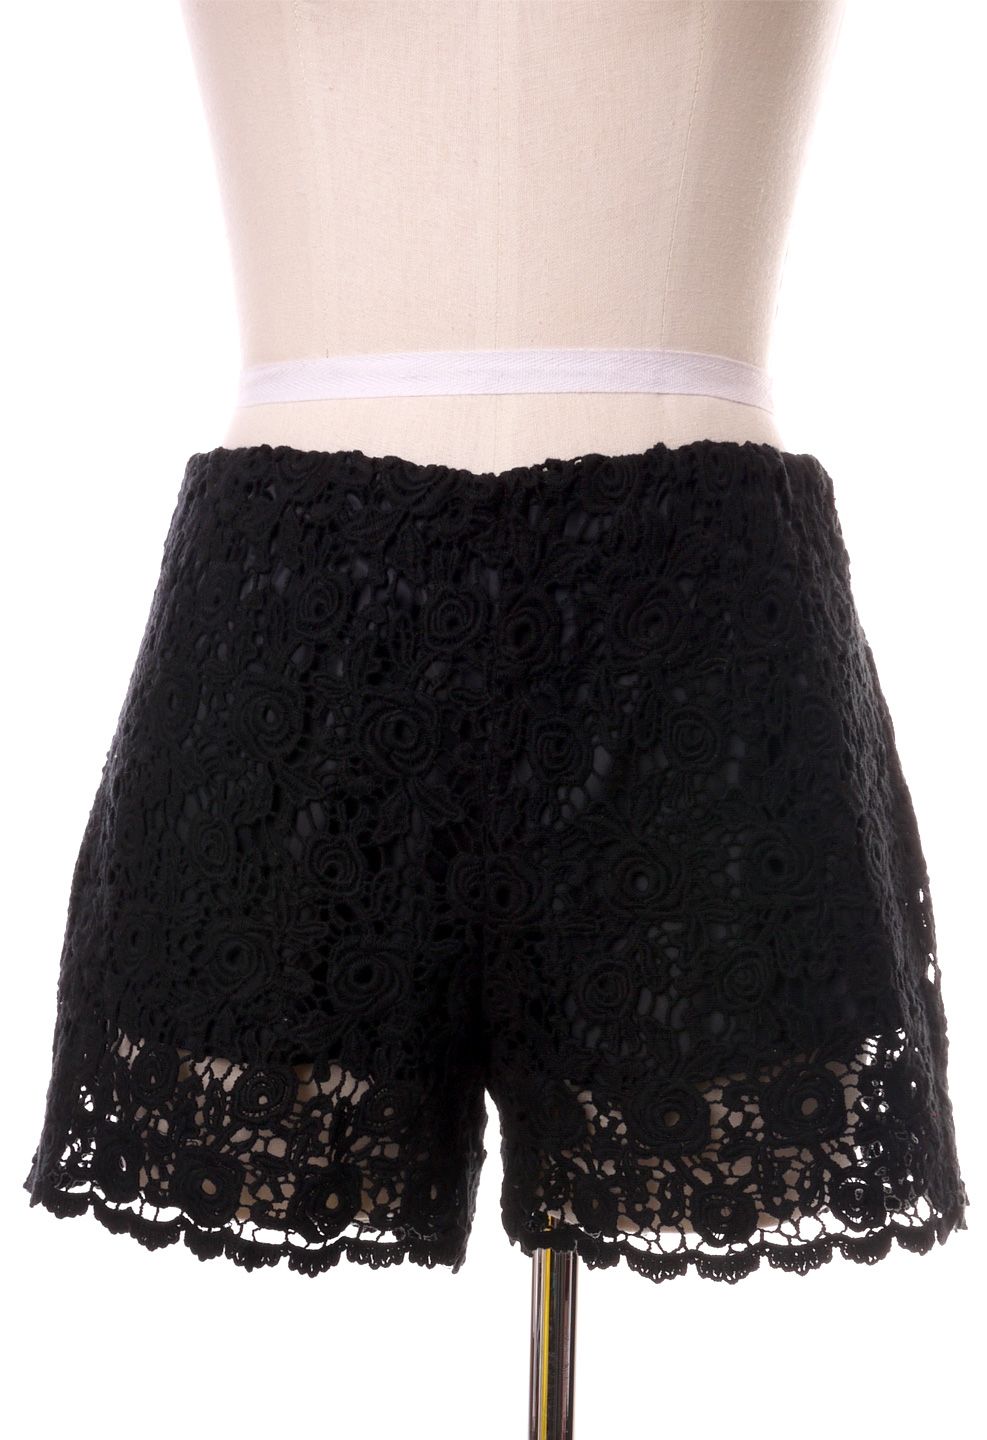 Beloved Lace Shorts in Black